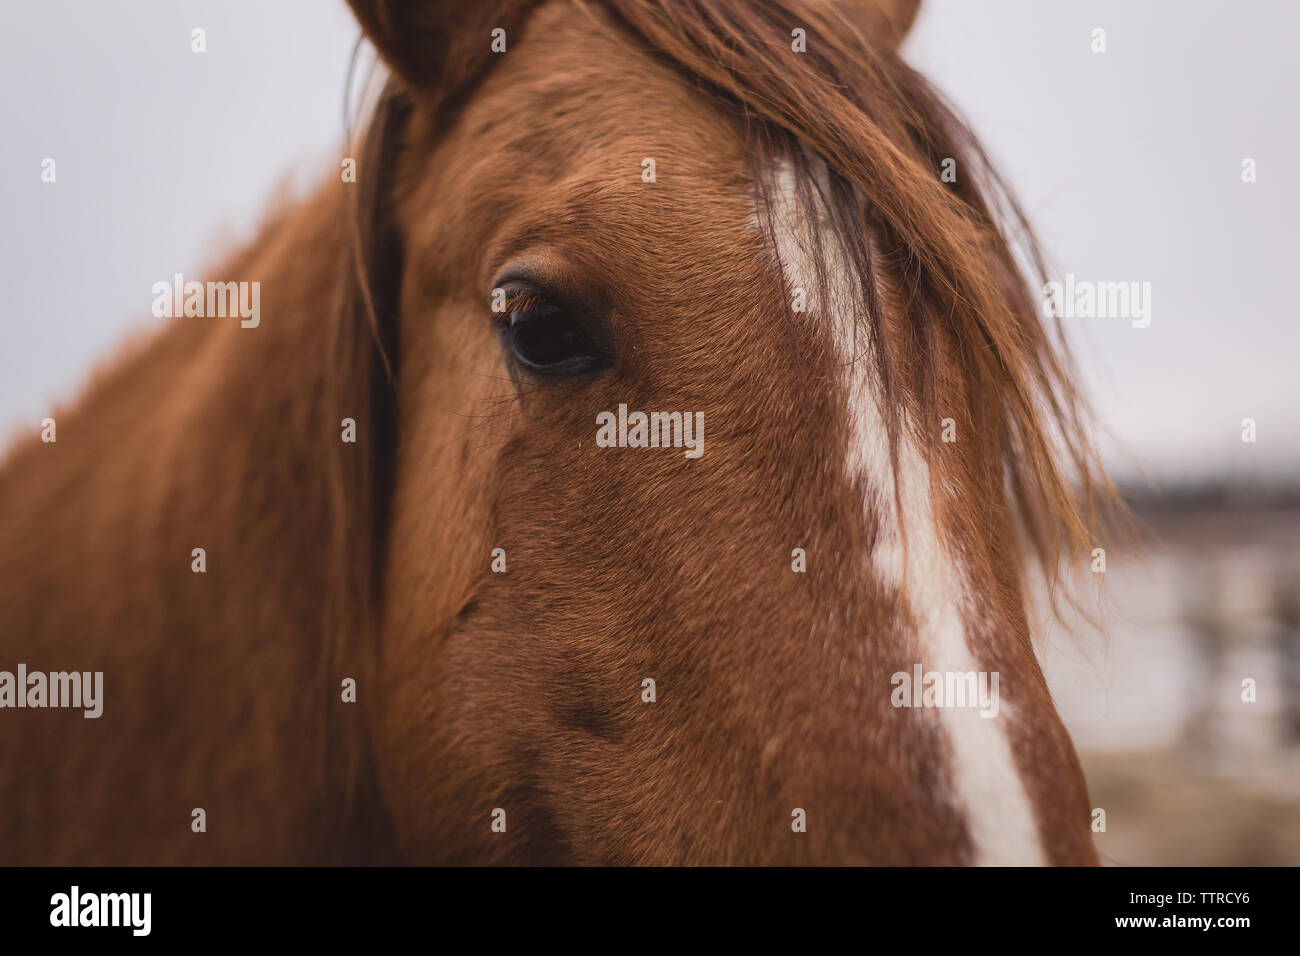 Close up of red quarter horse eye Banque D'Images